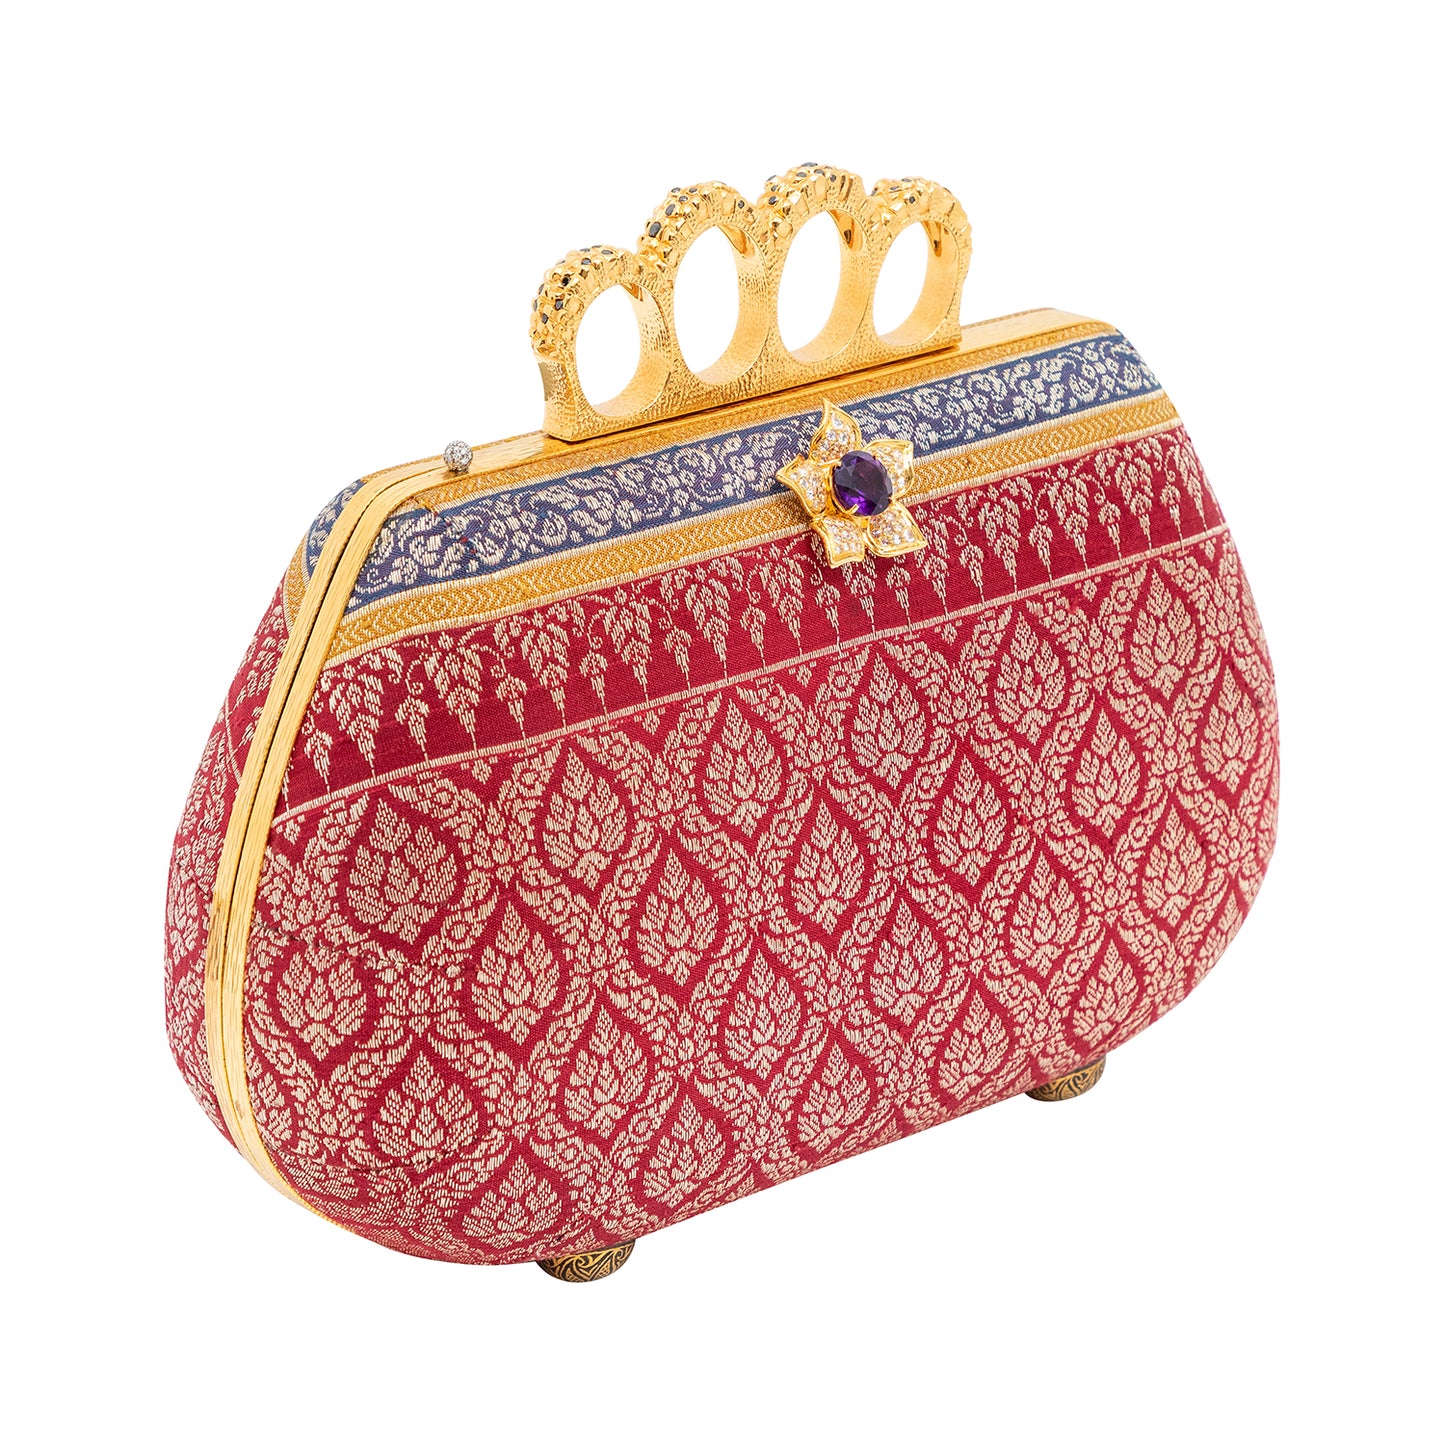 Silapacheep Textile Handbag with Flower, Amethyst and Diamond